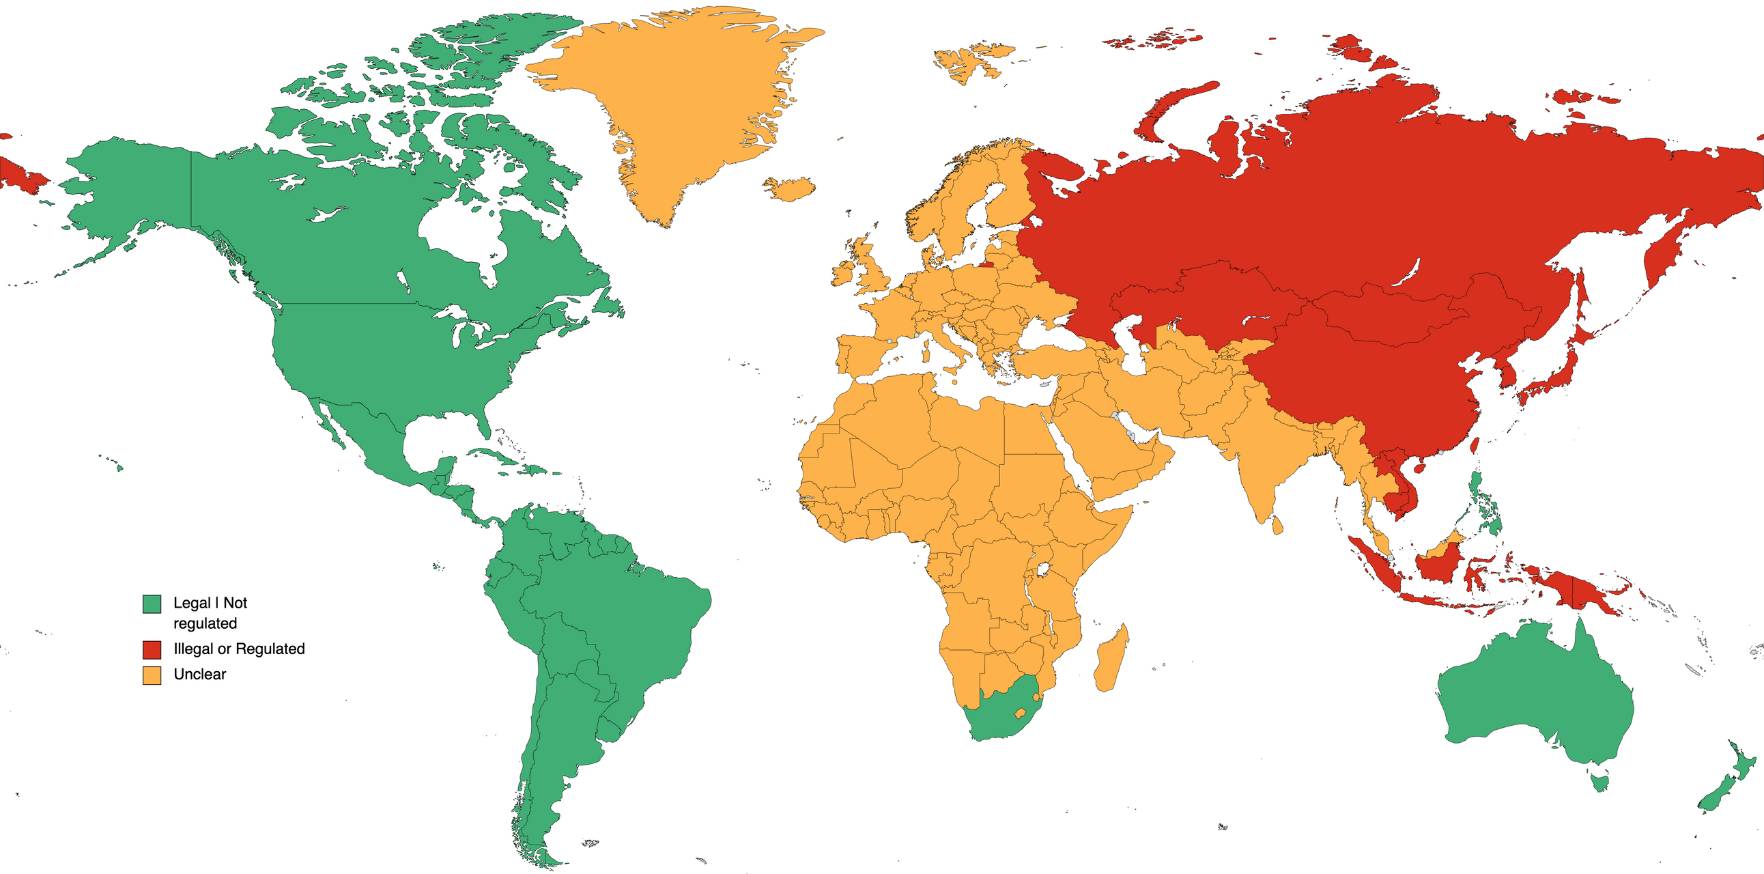 katana legality by country